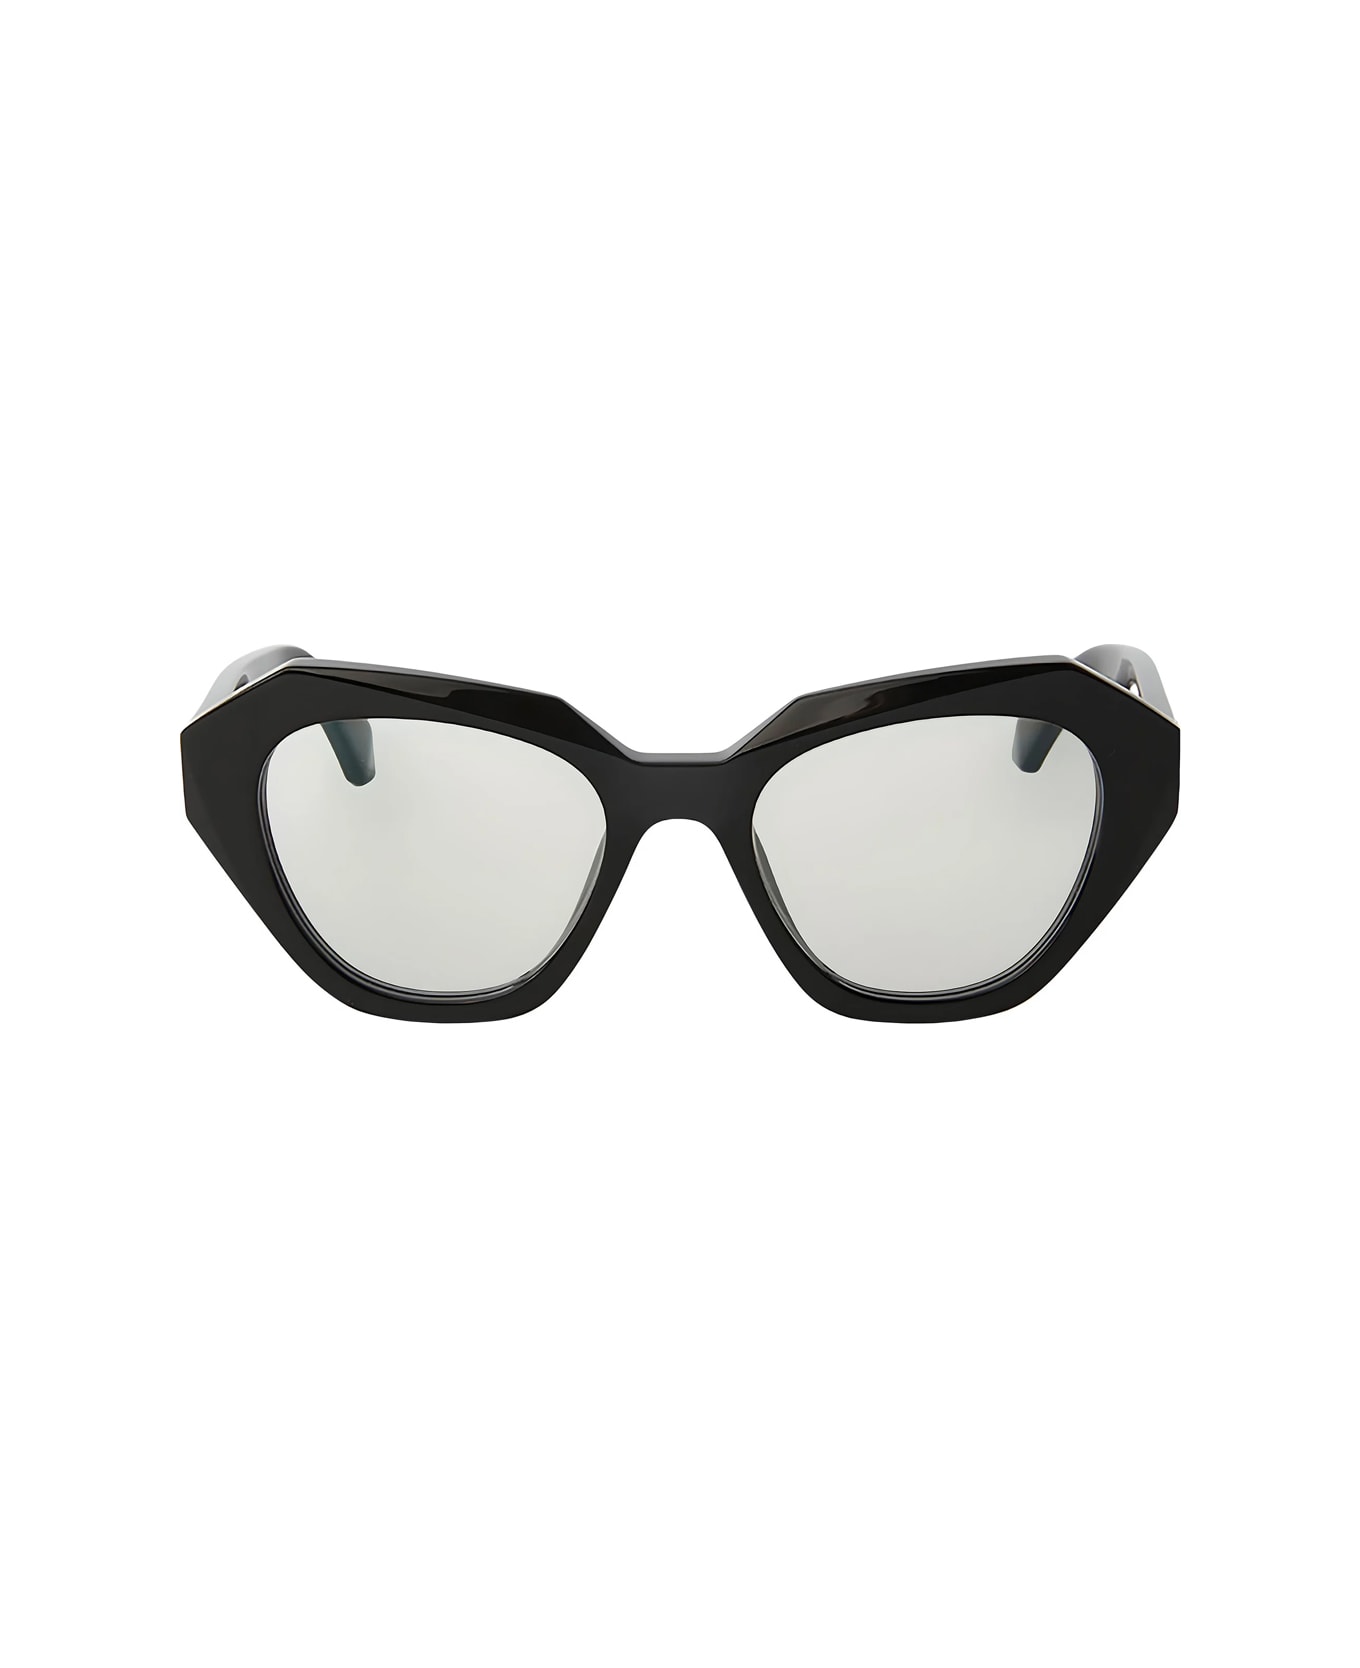 Off-White Off White Oerj074 Style 74 1000 Black Glasses - Nero